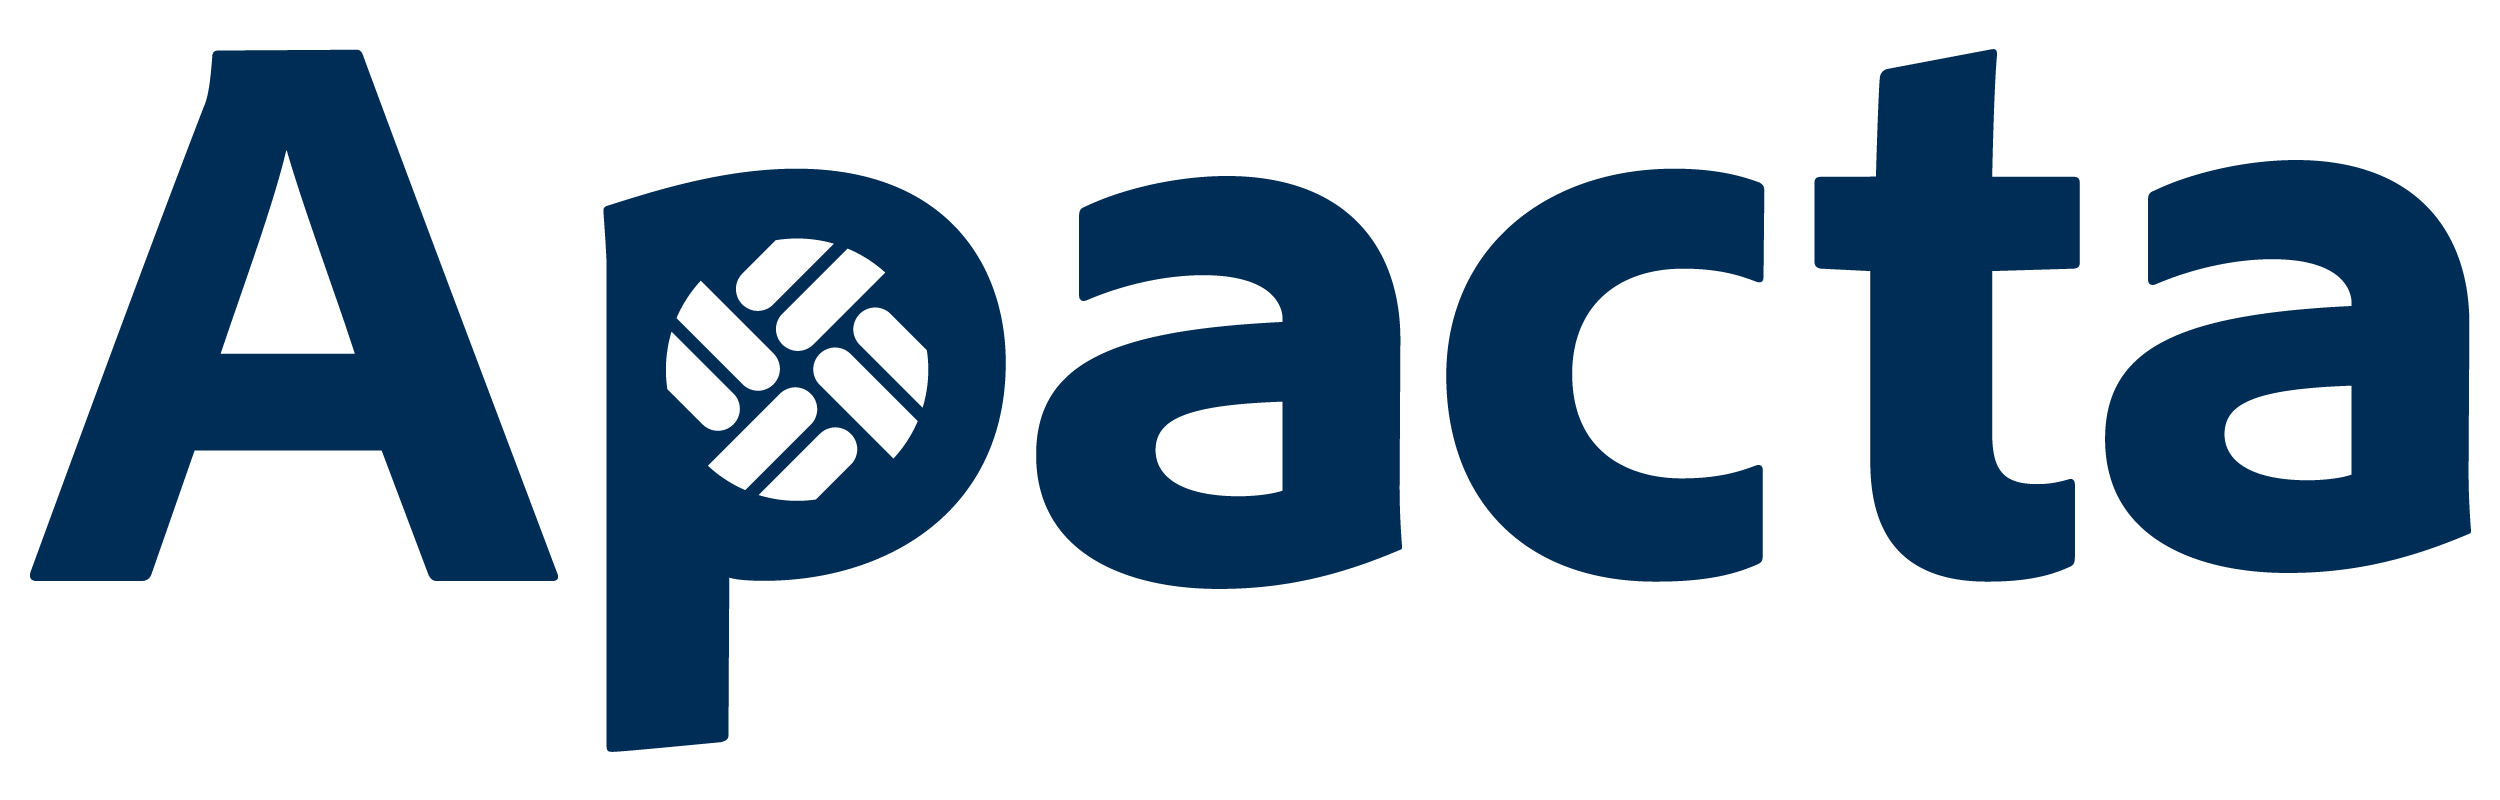 Apacta_logo (3)